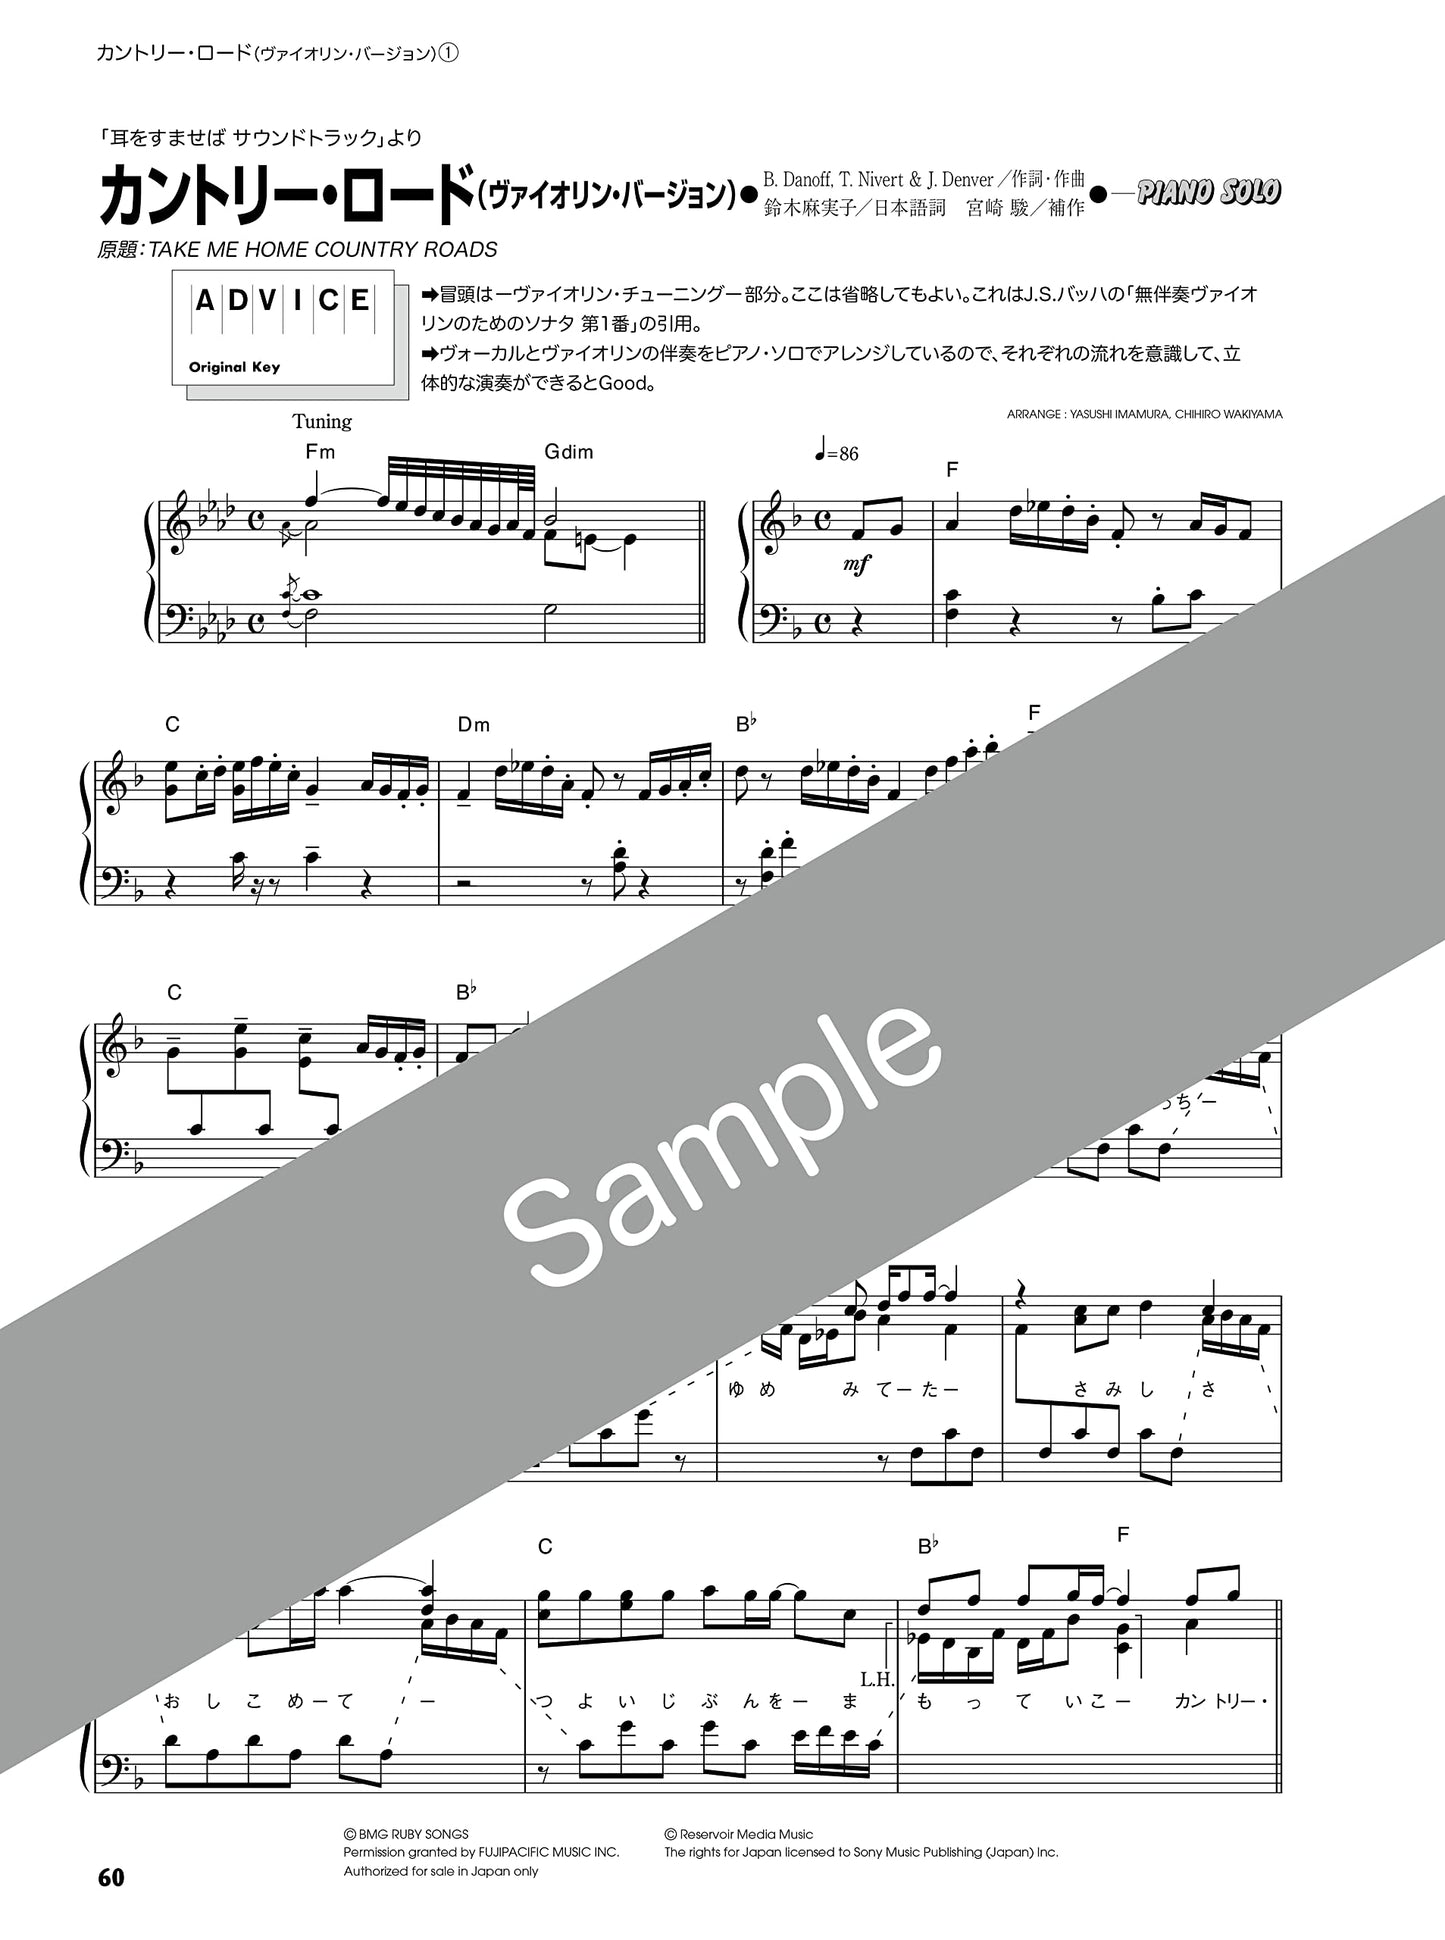 Whisper of the Heart Collection(Studio Ghibli) for Piano Solo(Upper-Intermediate) Sheet Music Book